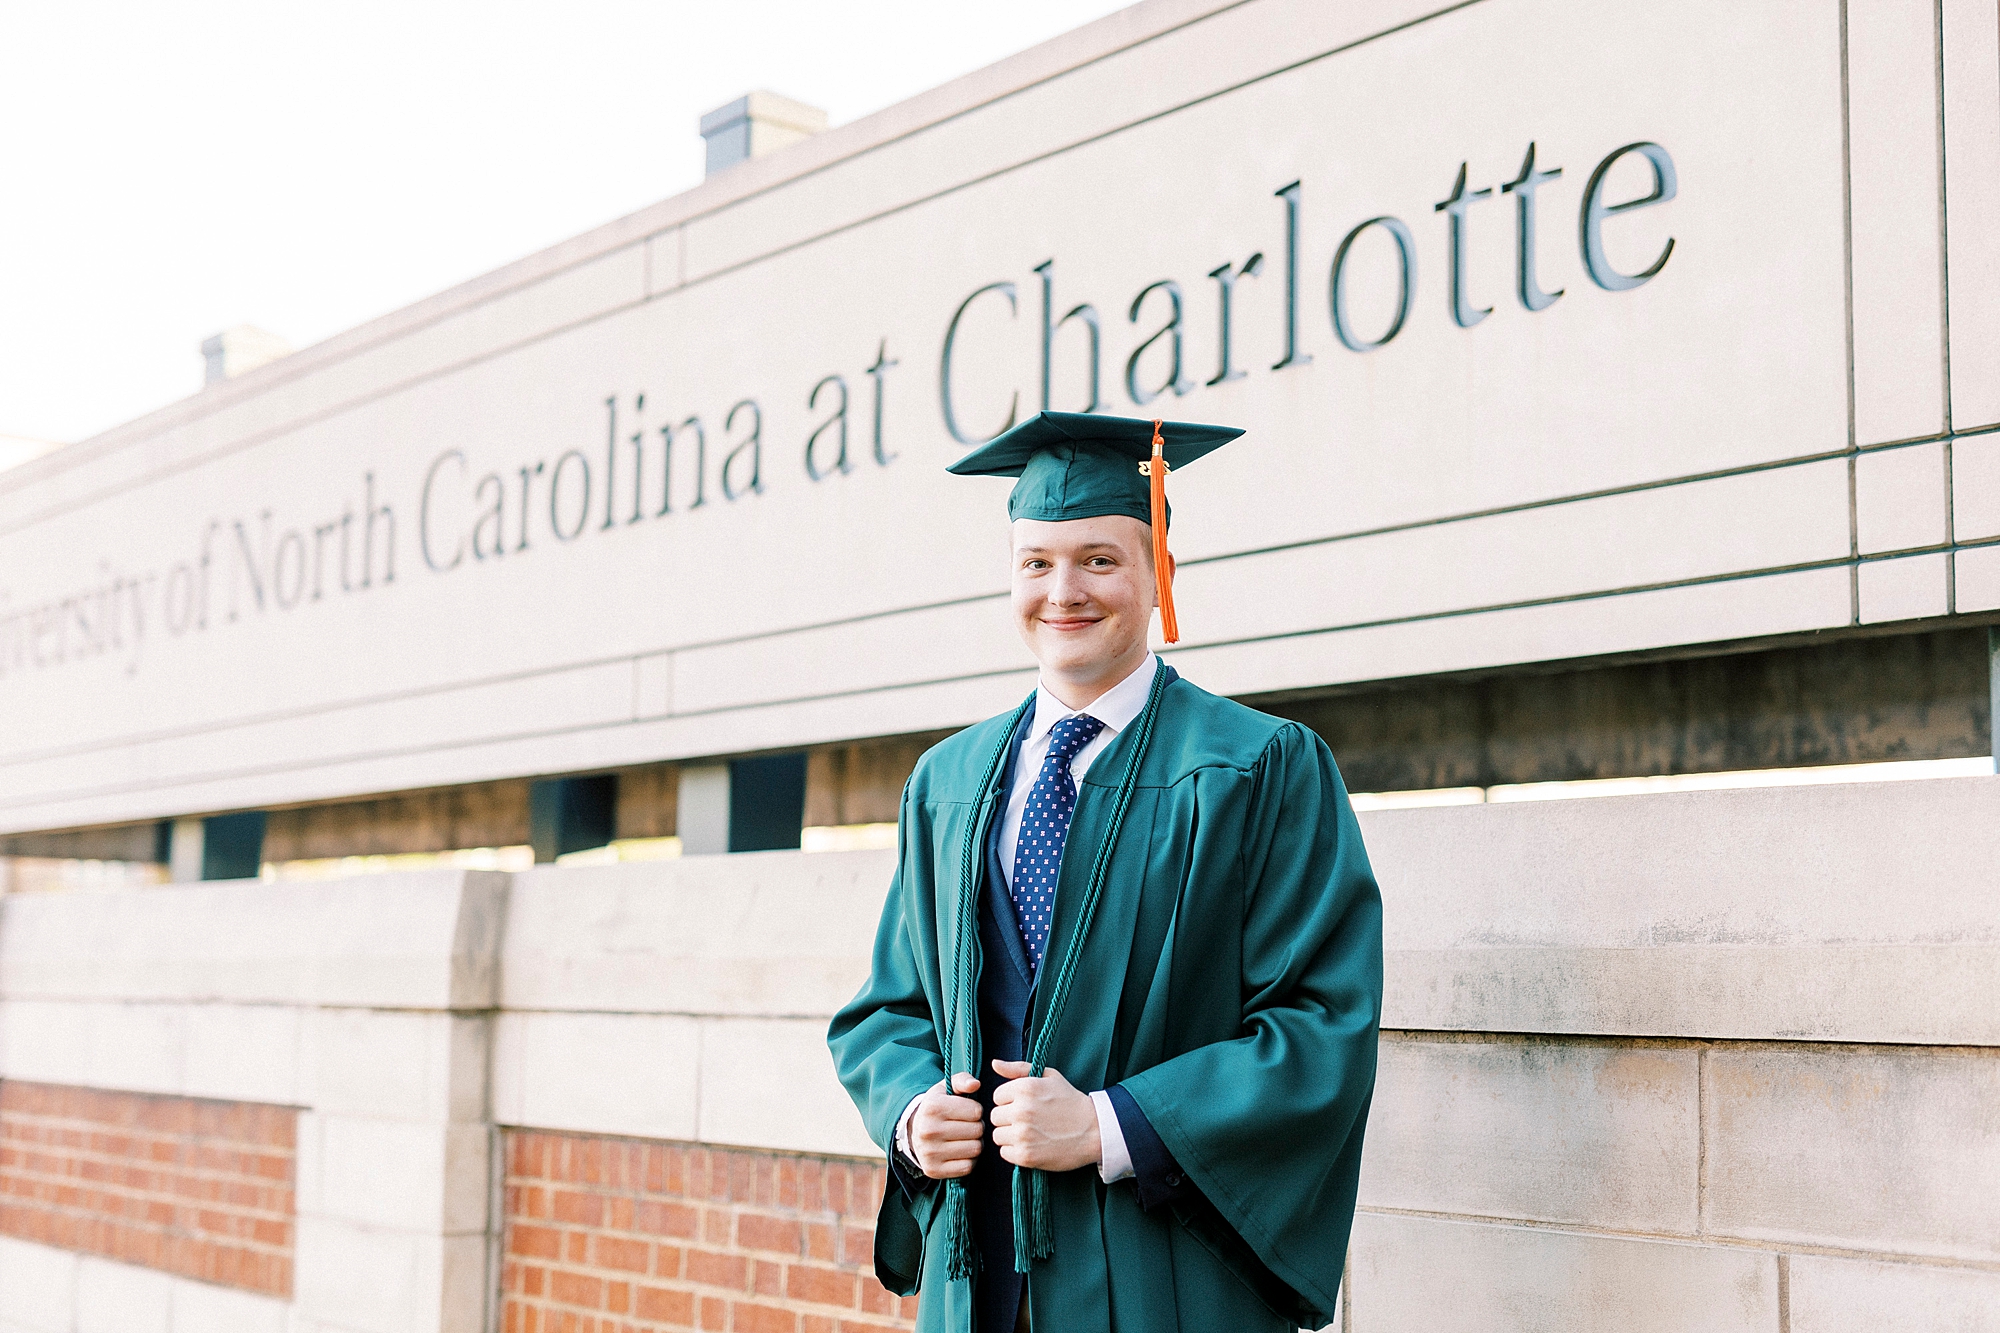 graduating senior in green cap and gown poses near University of North Carolina at Charlotte sign